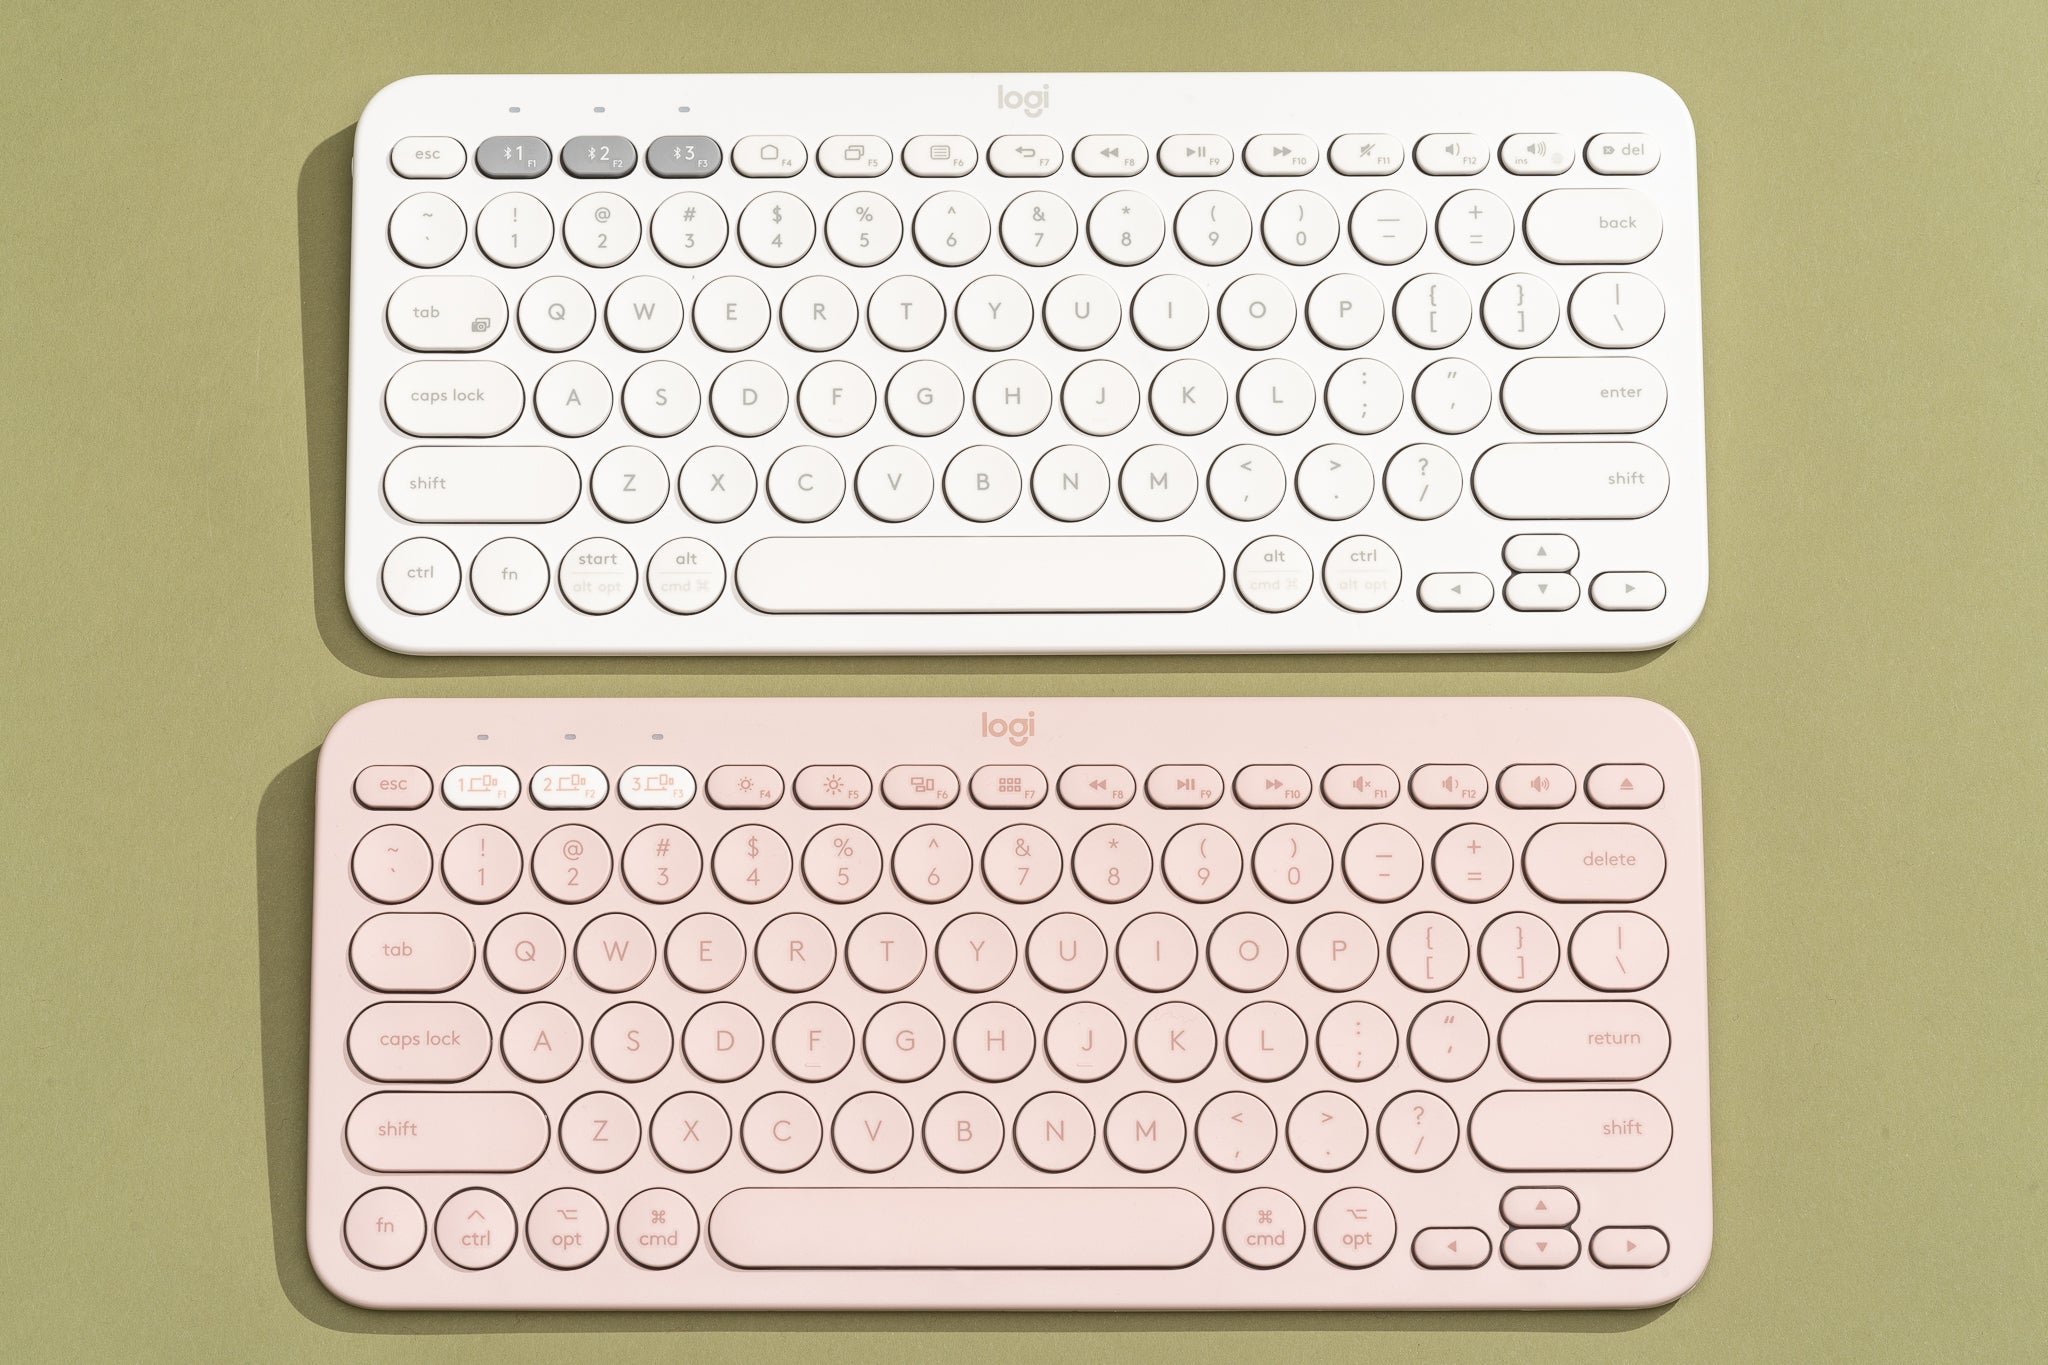 best wireless keyboard to use for 2011 mac mini server